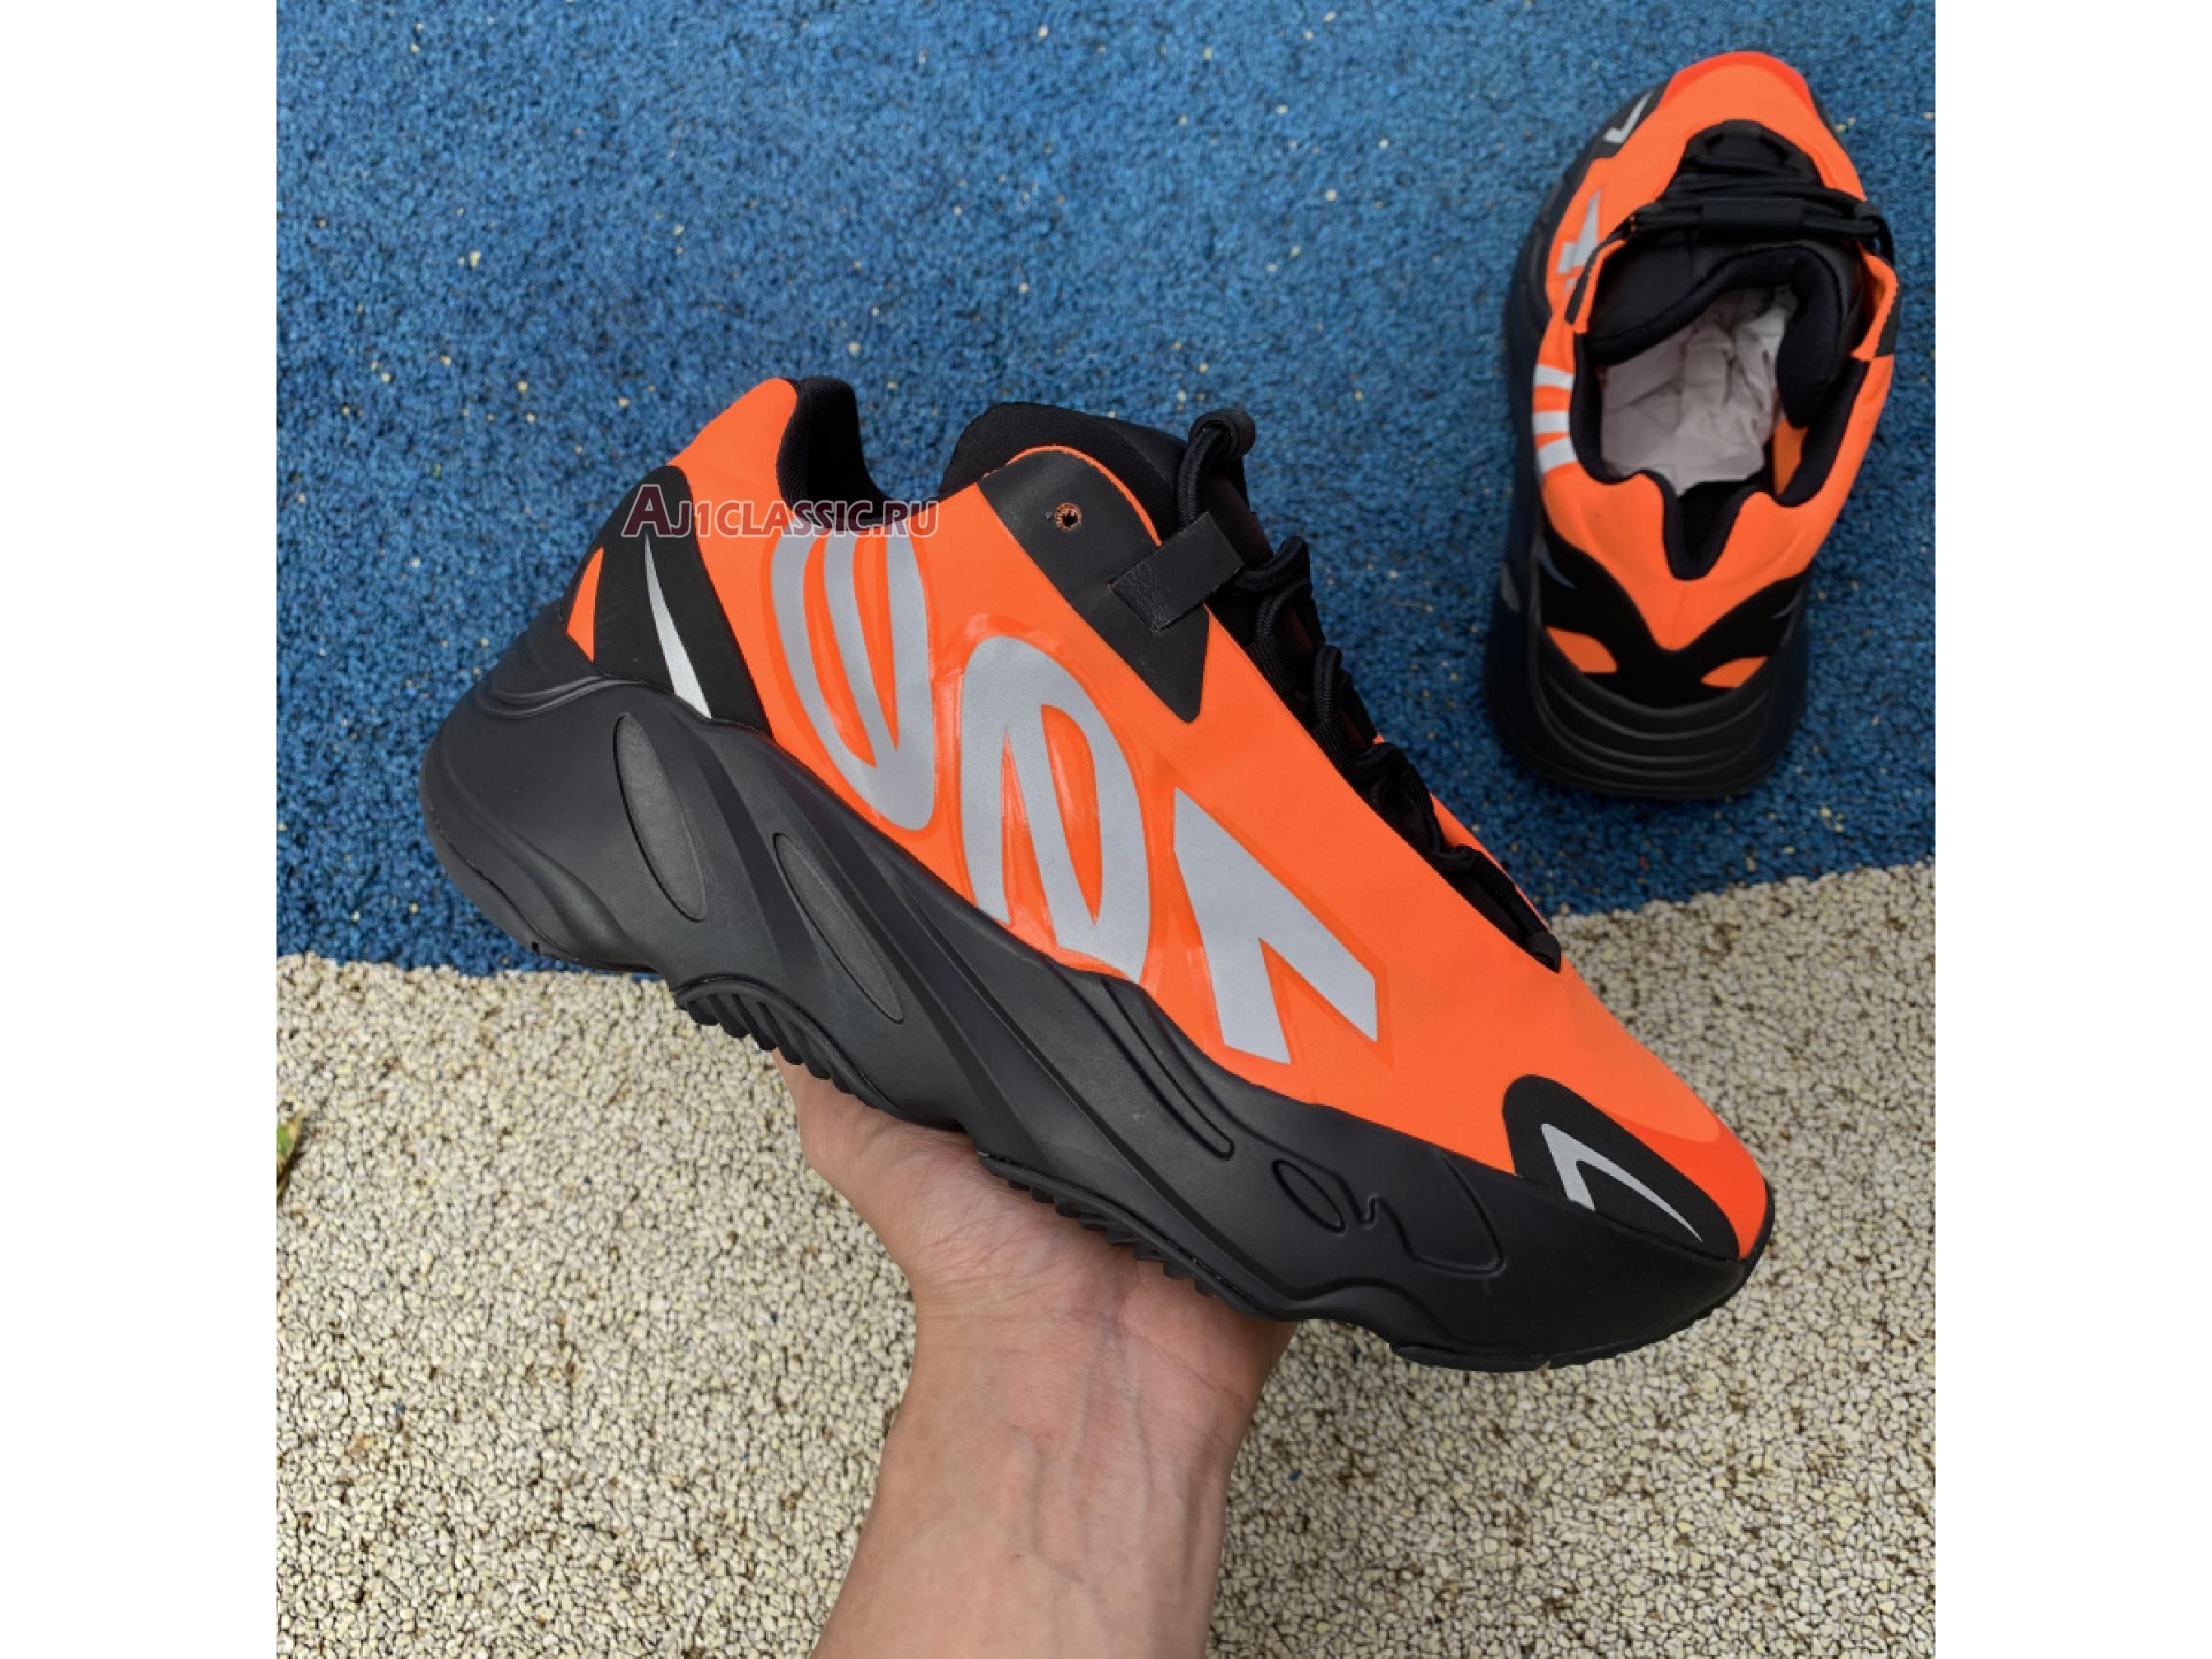 Adidas Yeezy Boost 700 MNVN "Orange" FV3258